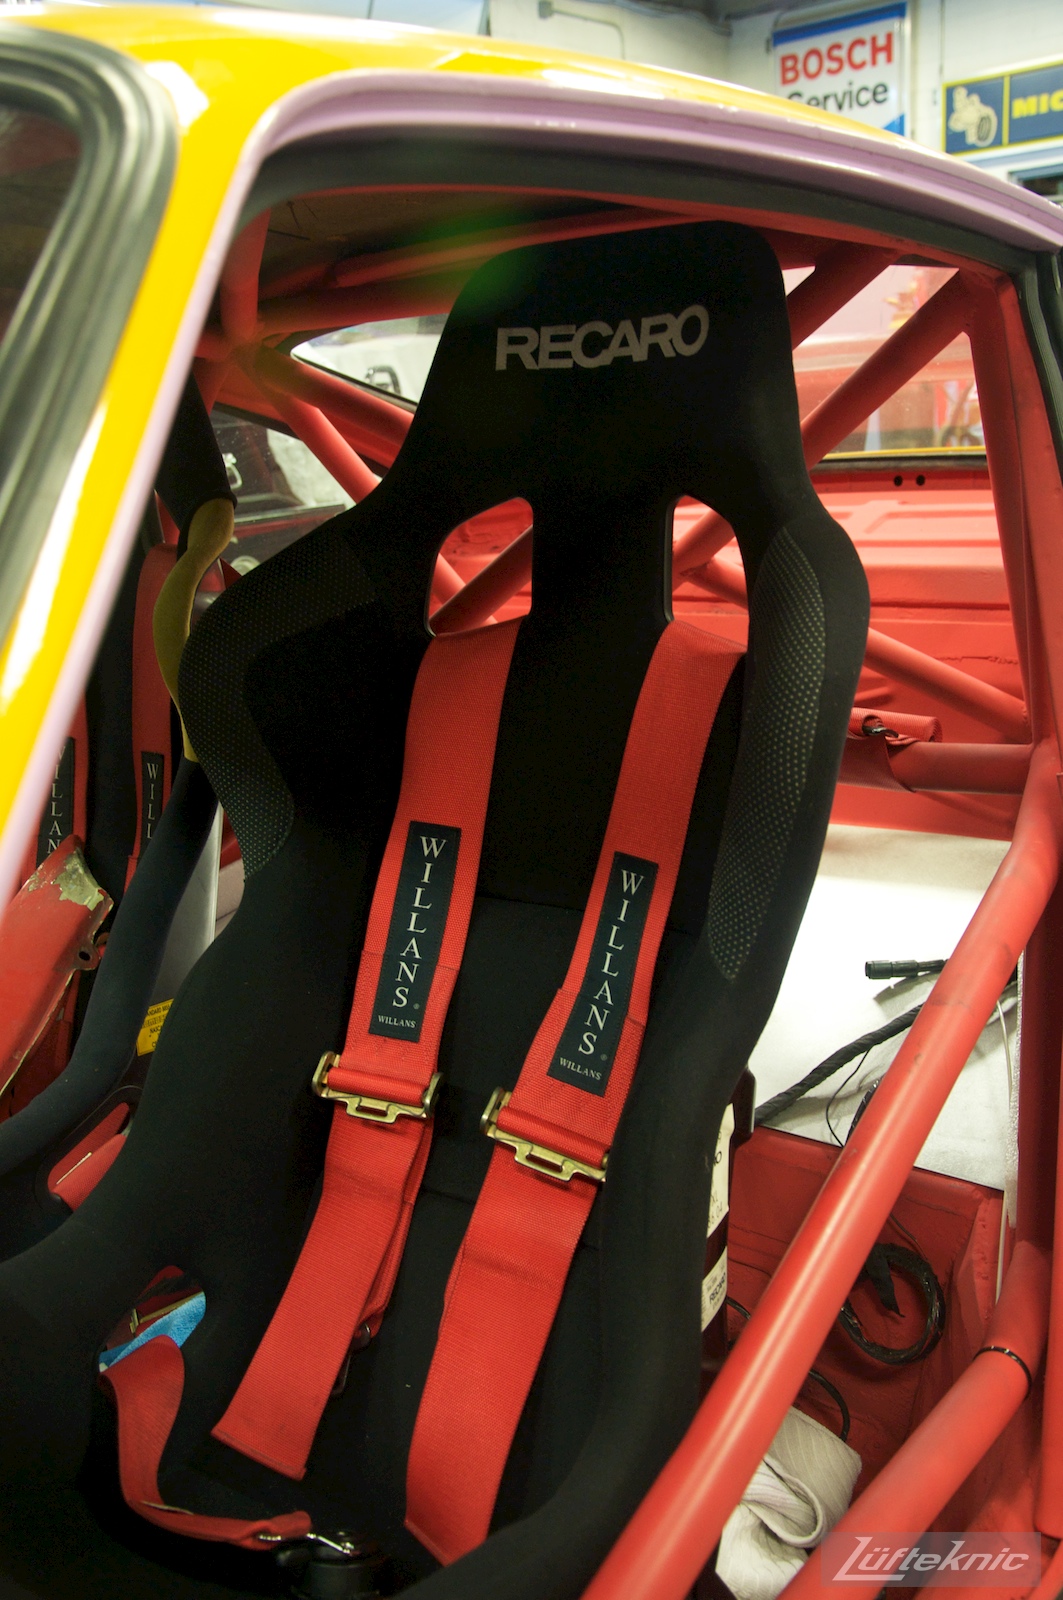 Lüfteknic #projectstuka Porsche 930 Turbo race car driver's seat